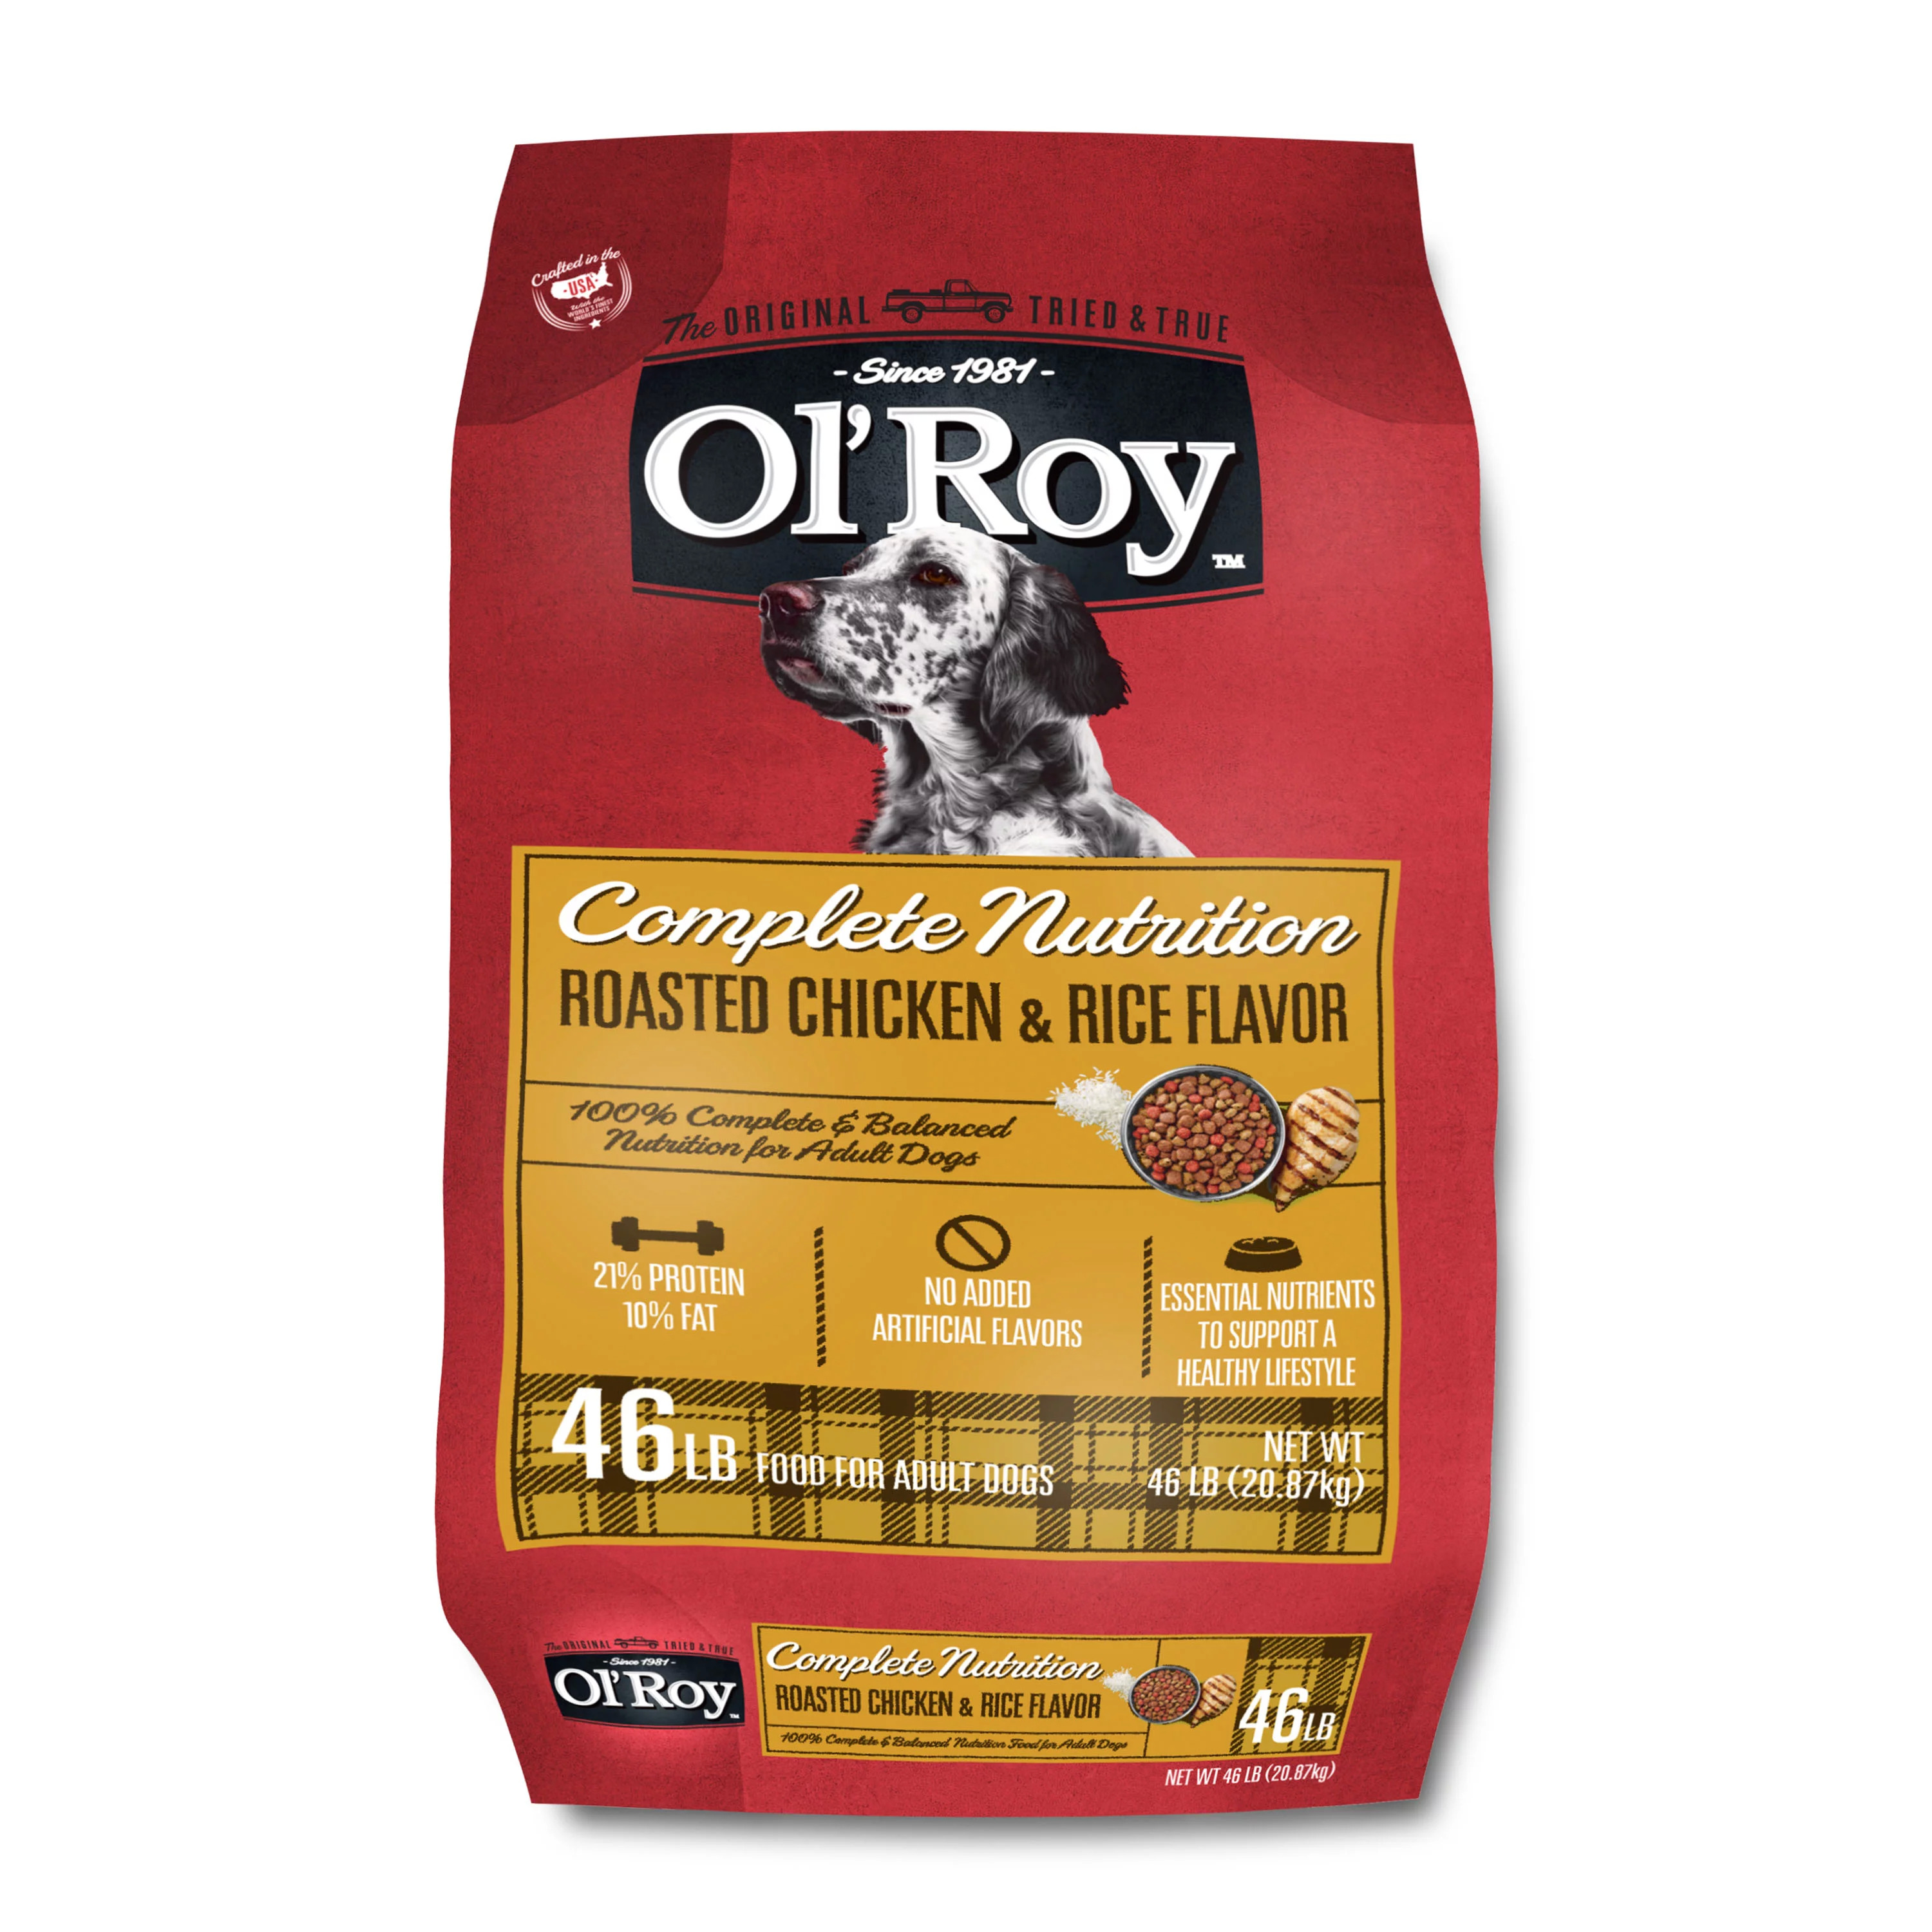 Ol' Roy Complete Nutrition Roasted Chicken & Rice Flavor Dry Dog Food, 46lb Bag - Walmart $19.98